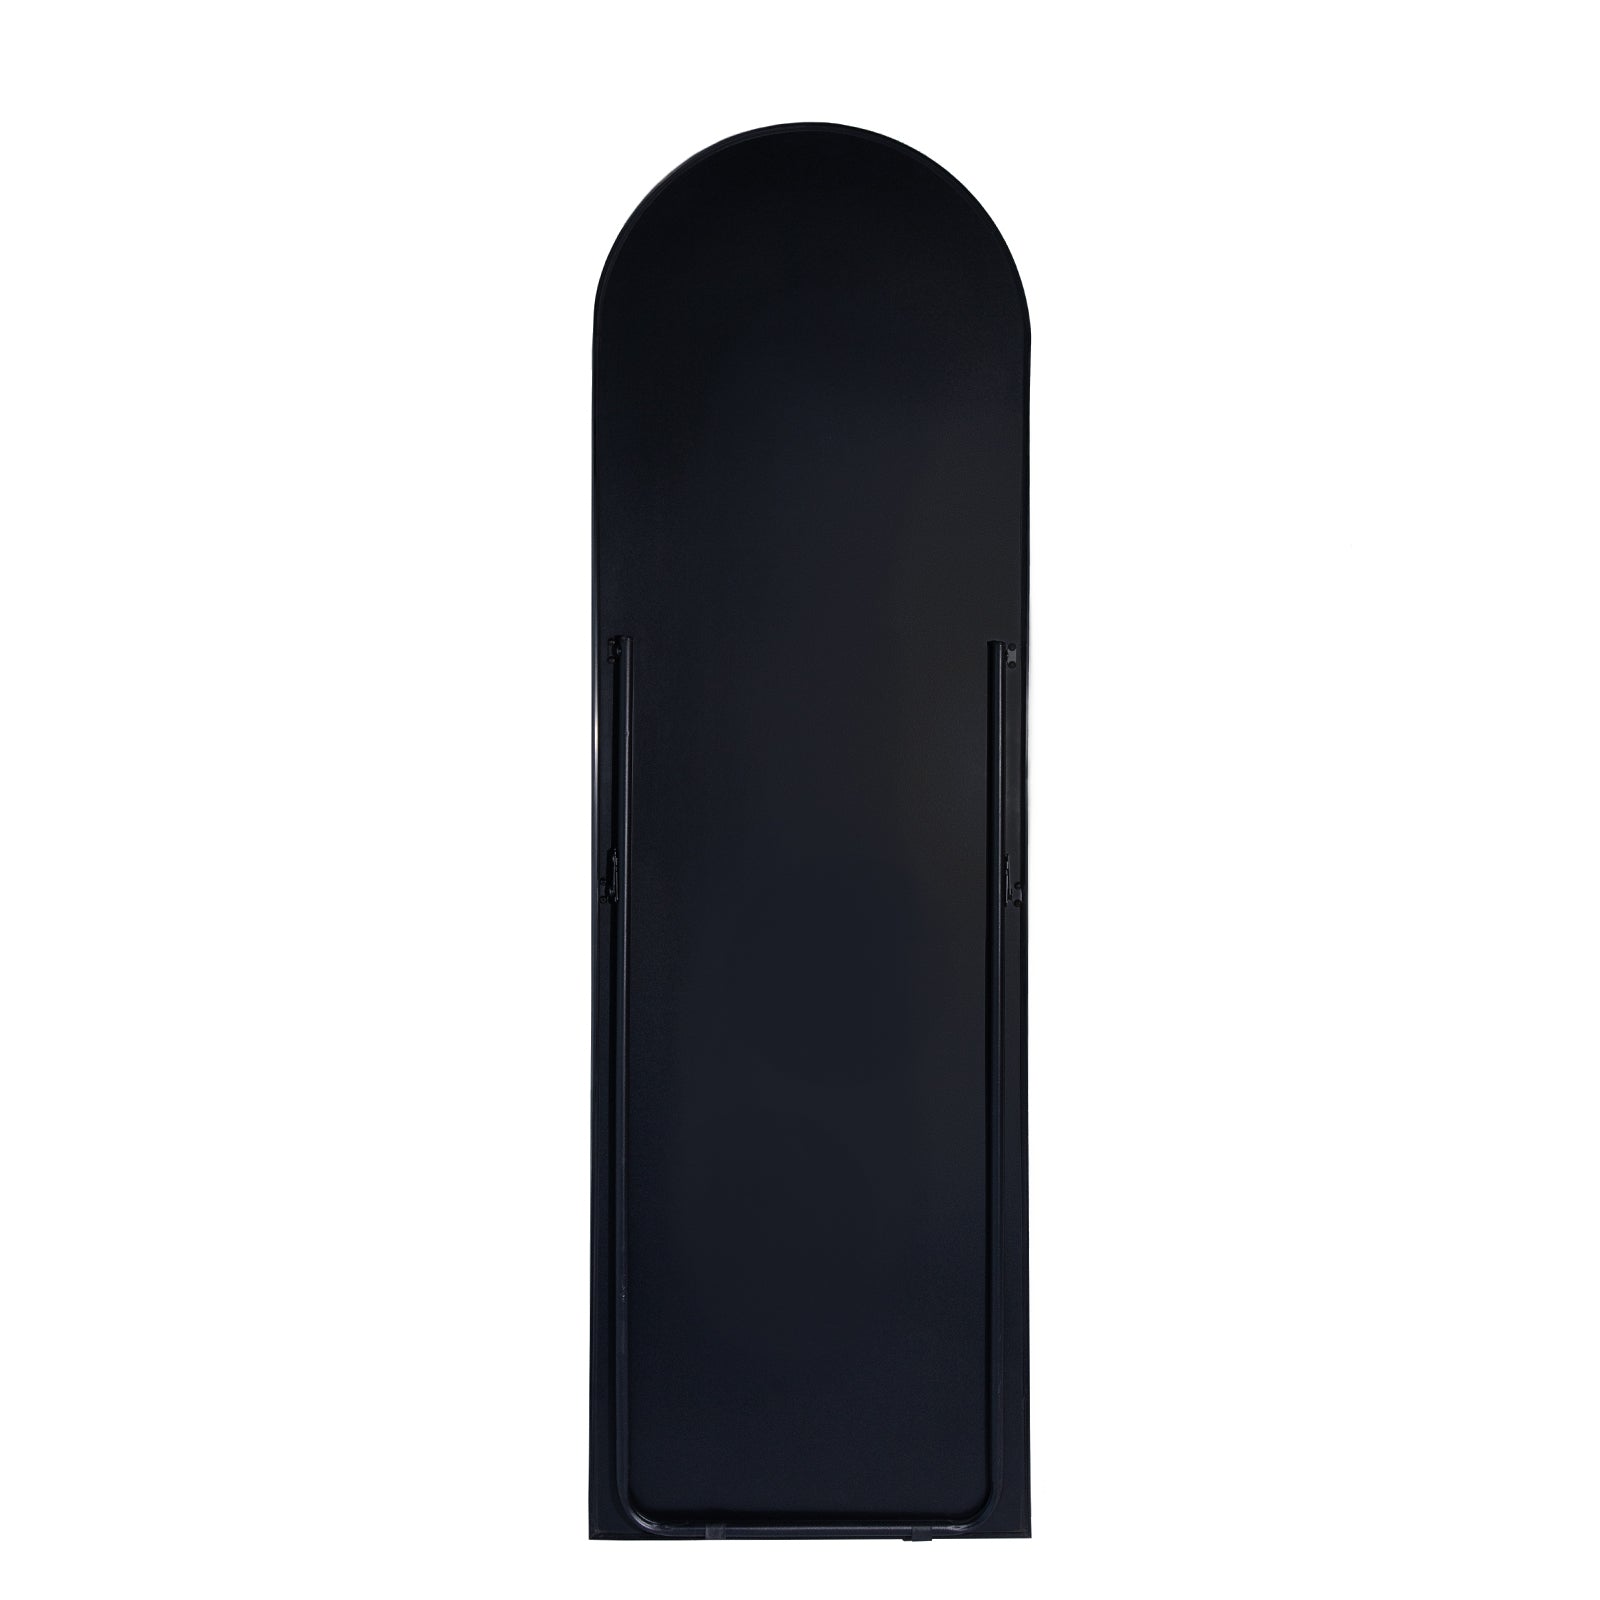 Black 71x27.5 inch metal arch stand full length mirror black-classic-mdf+glass-aluminium alloy